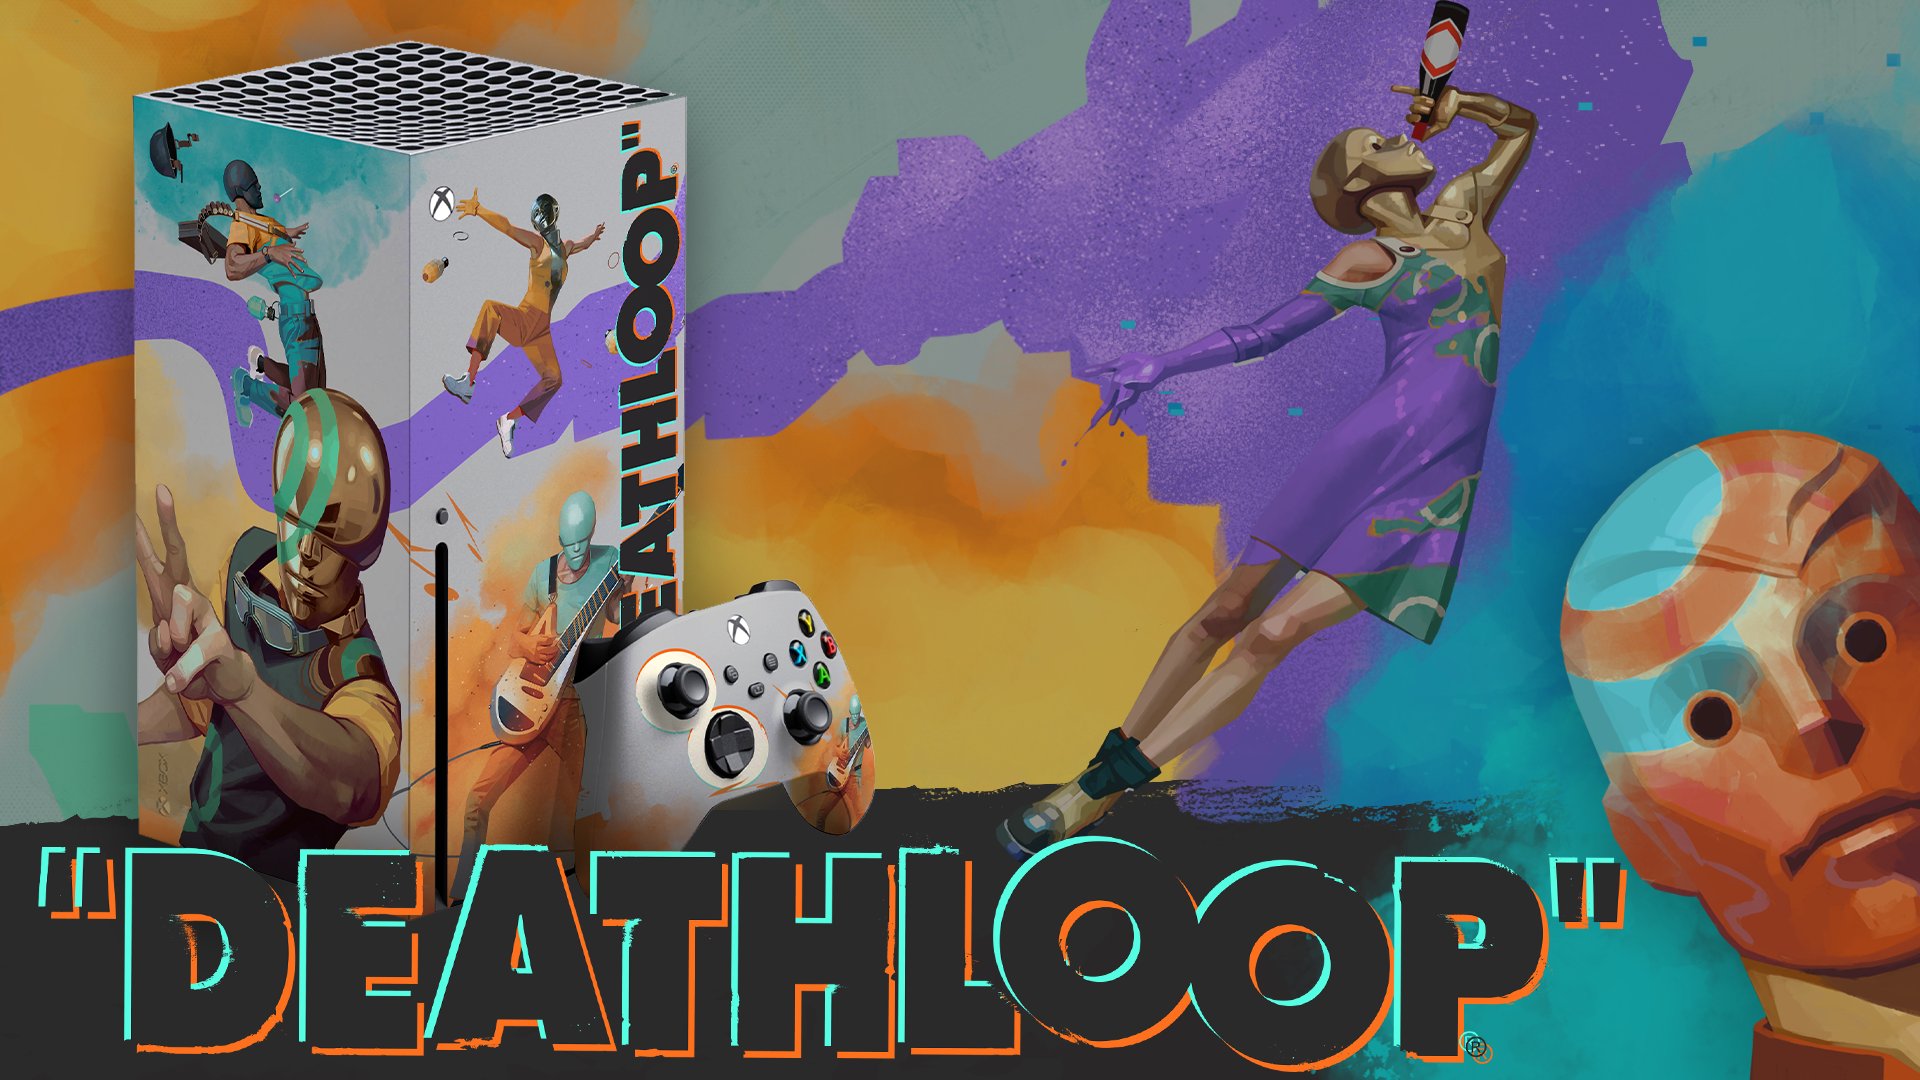 Команда Xbox показала уникальную Xbox Series X в стиле Deathloop